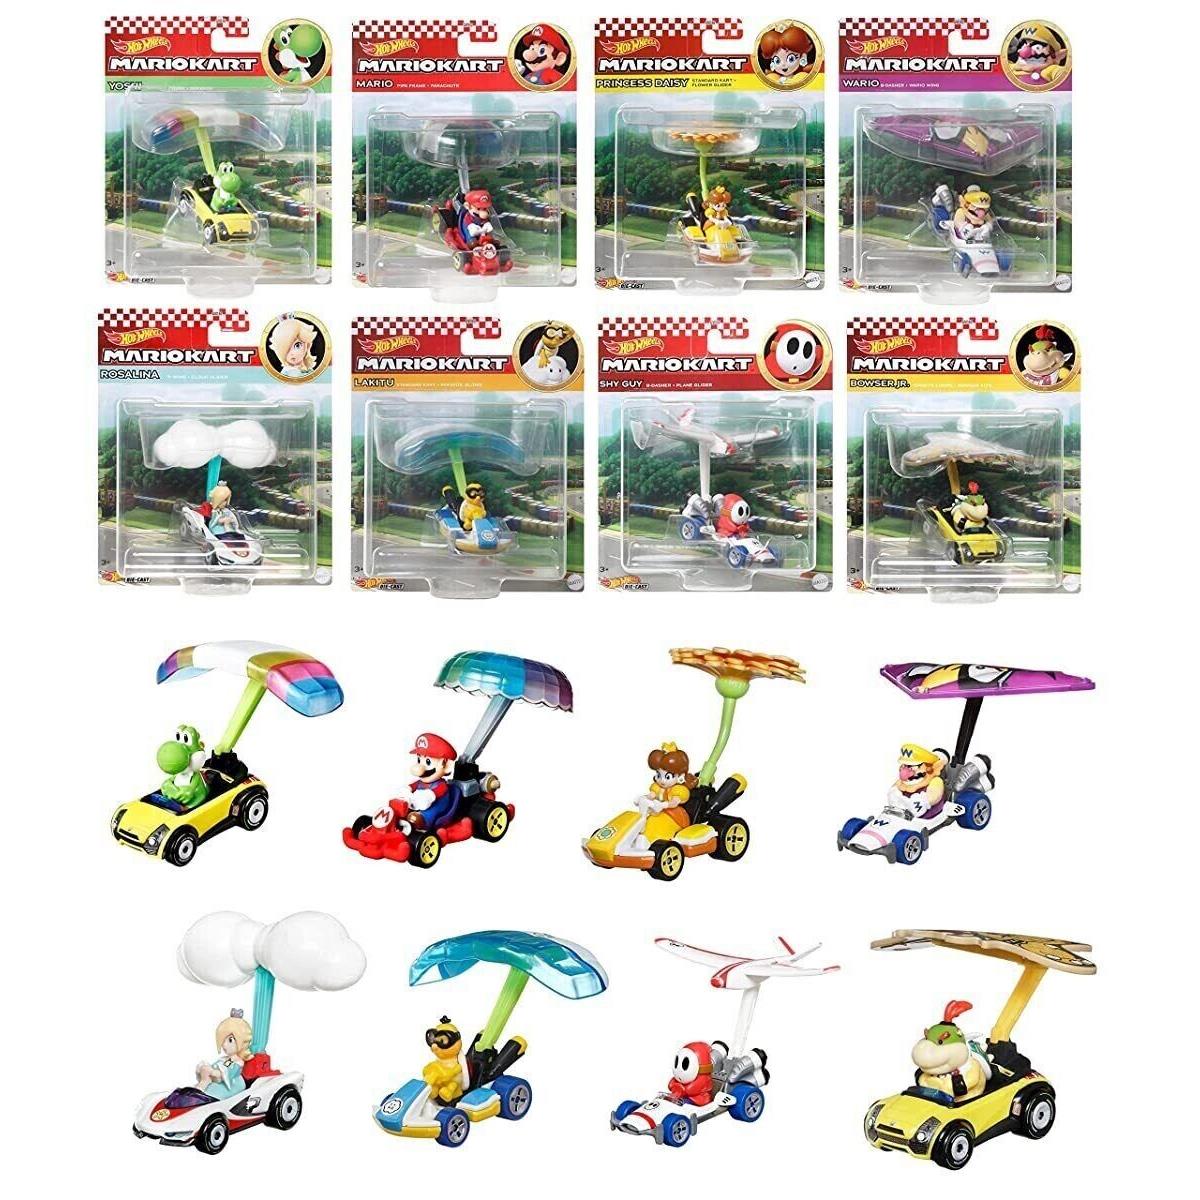 Hot Wheels Mario Kart Glider Assortment H Set of 8 Cars GVD30-986H